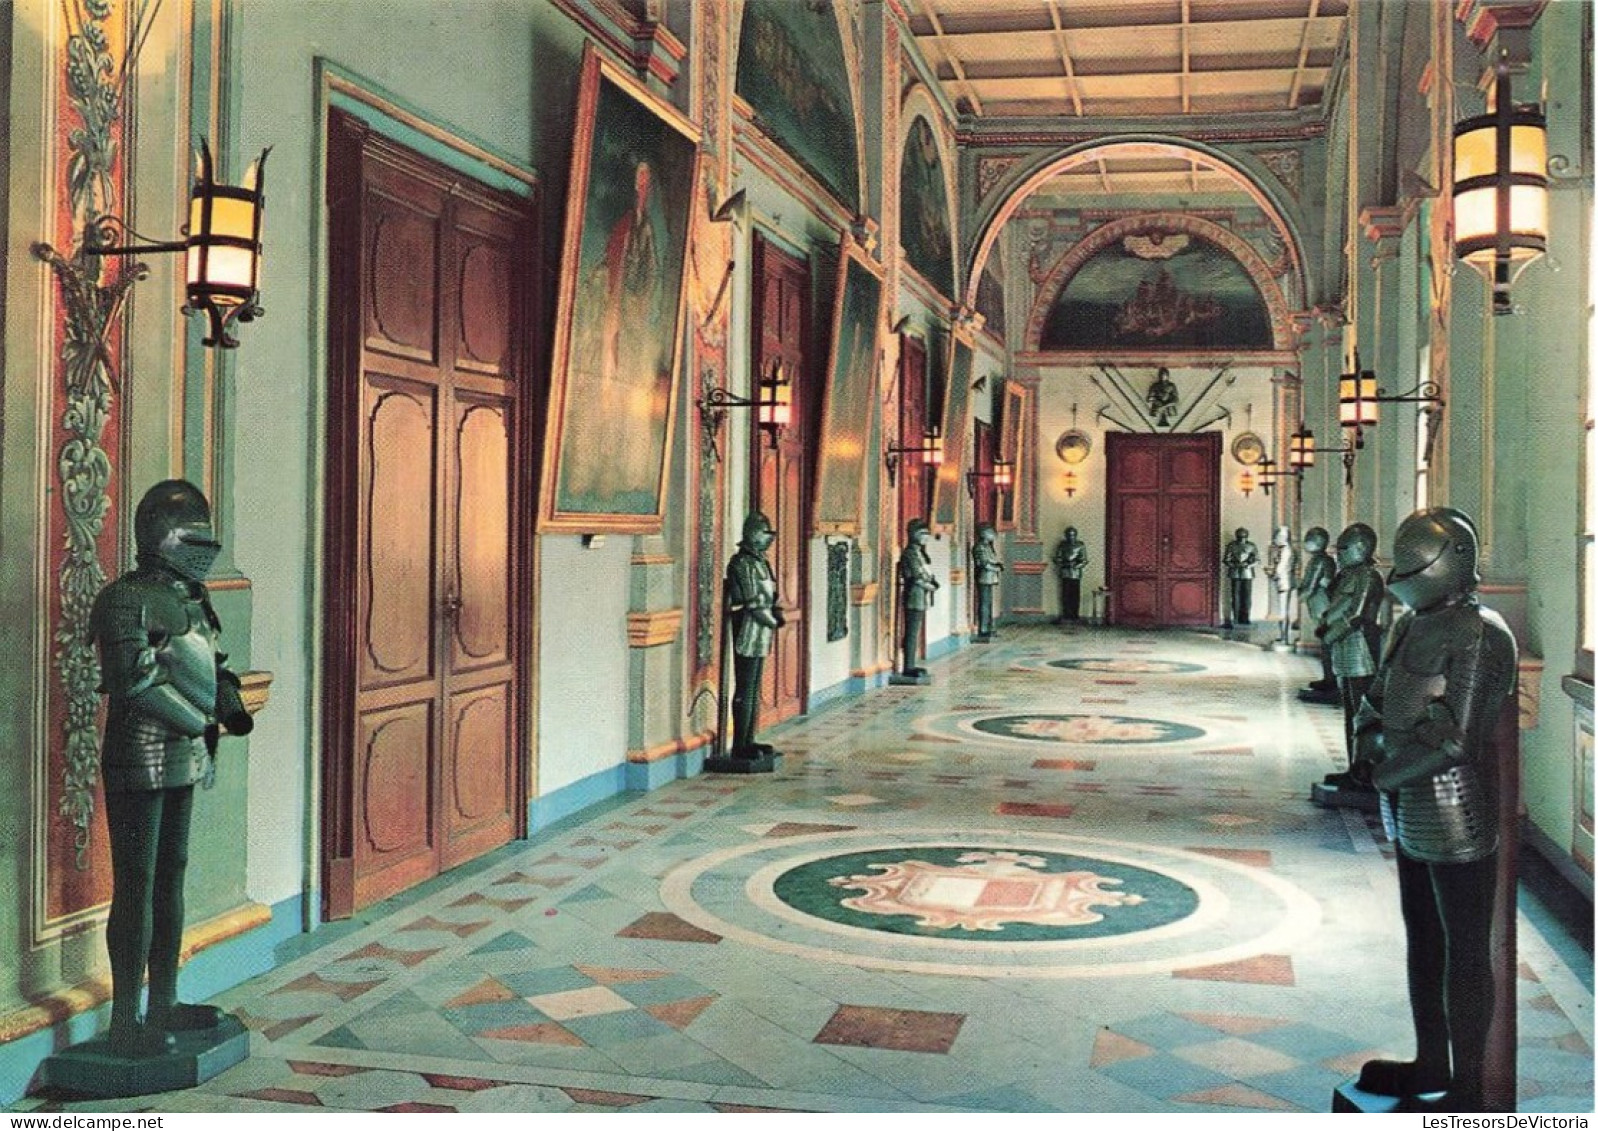 MALTE - Malta - A Corridor At President's Palace - Valletta - Vue De L'intérieure - Carte Postale - Malte